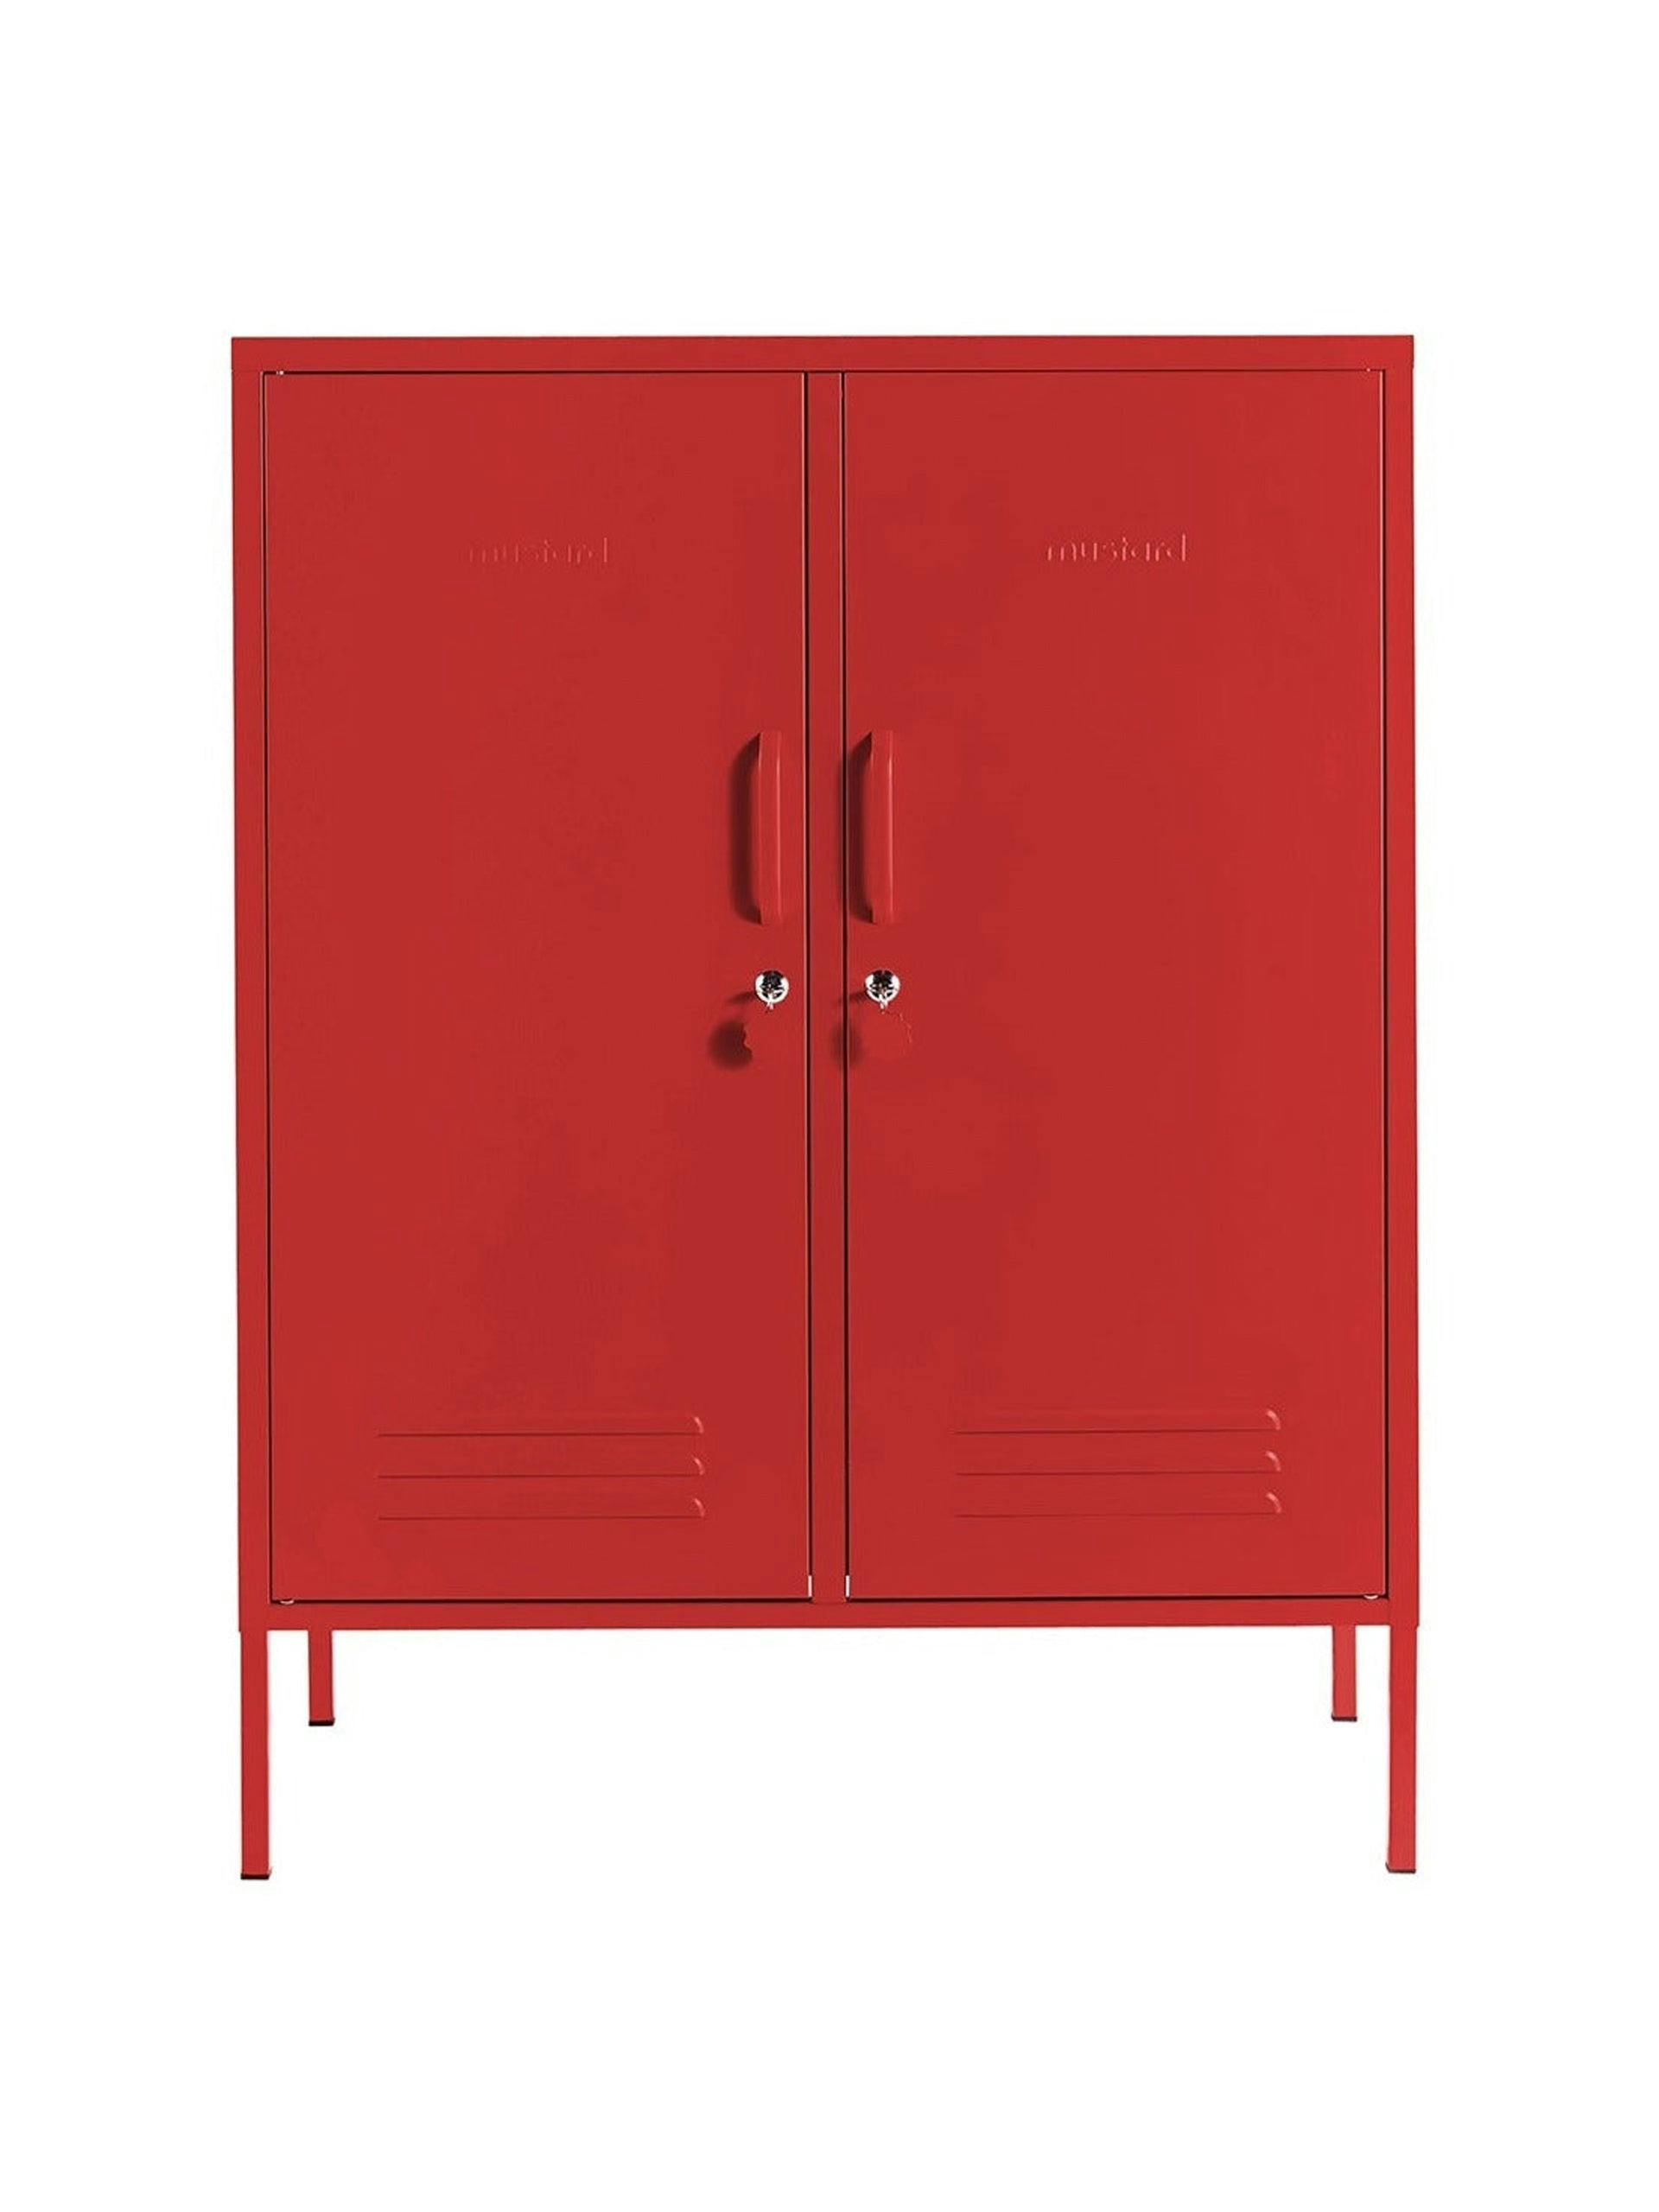 The Midi storage locker in Poppy